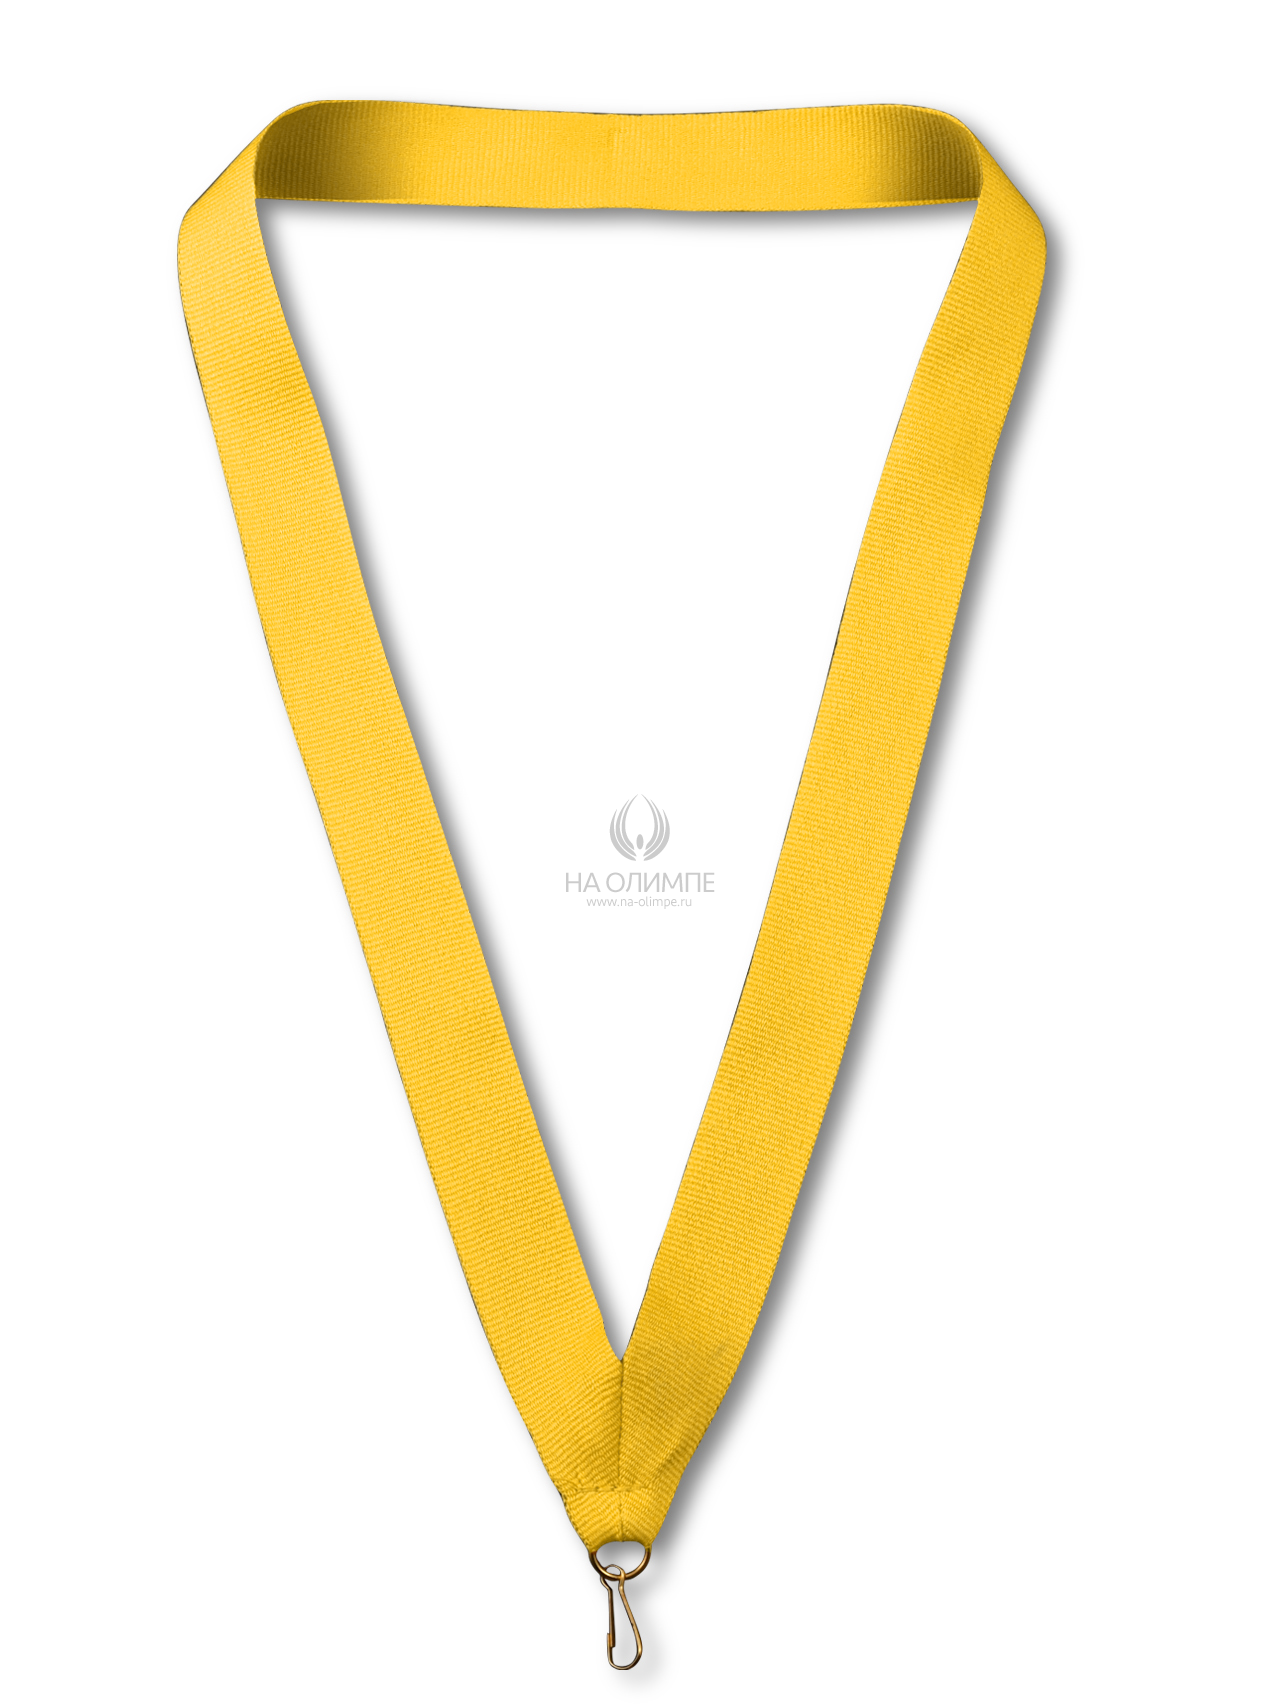 Лента для медали желтая 22мм, ширина ленты 22 мм